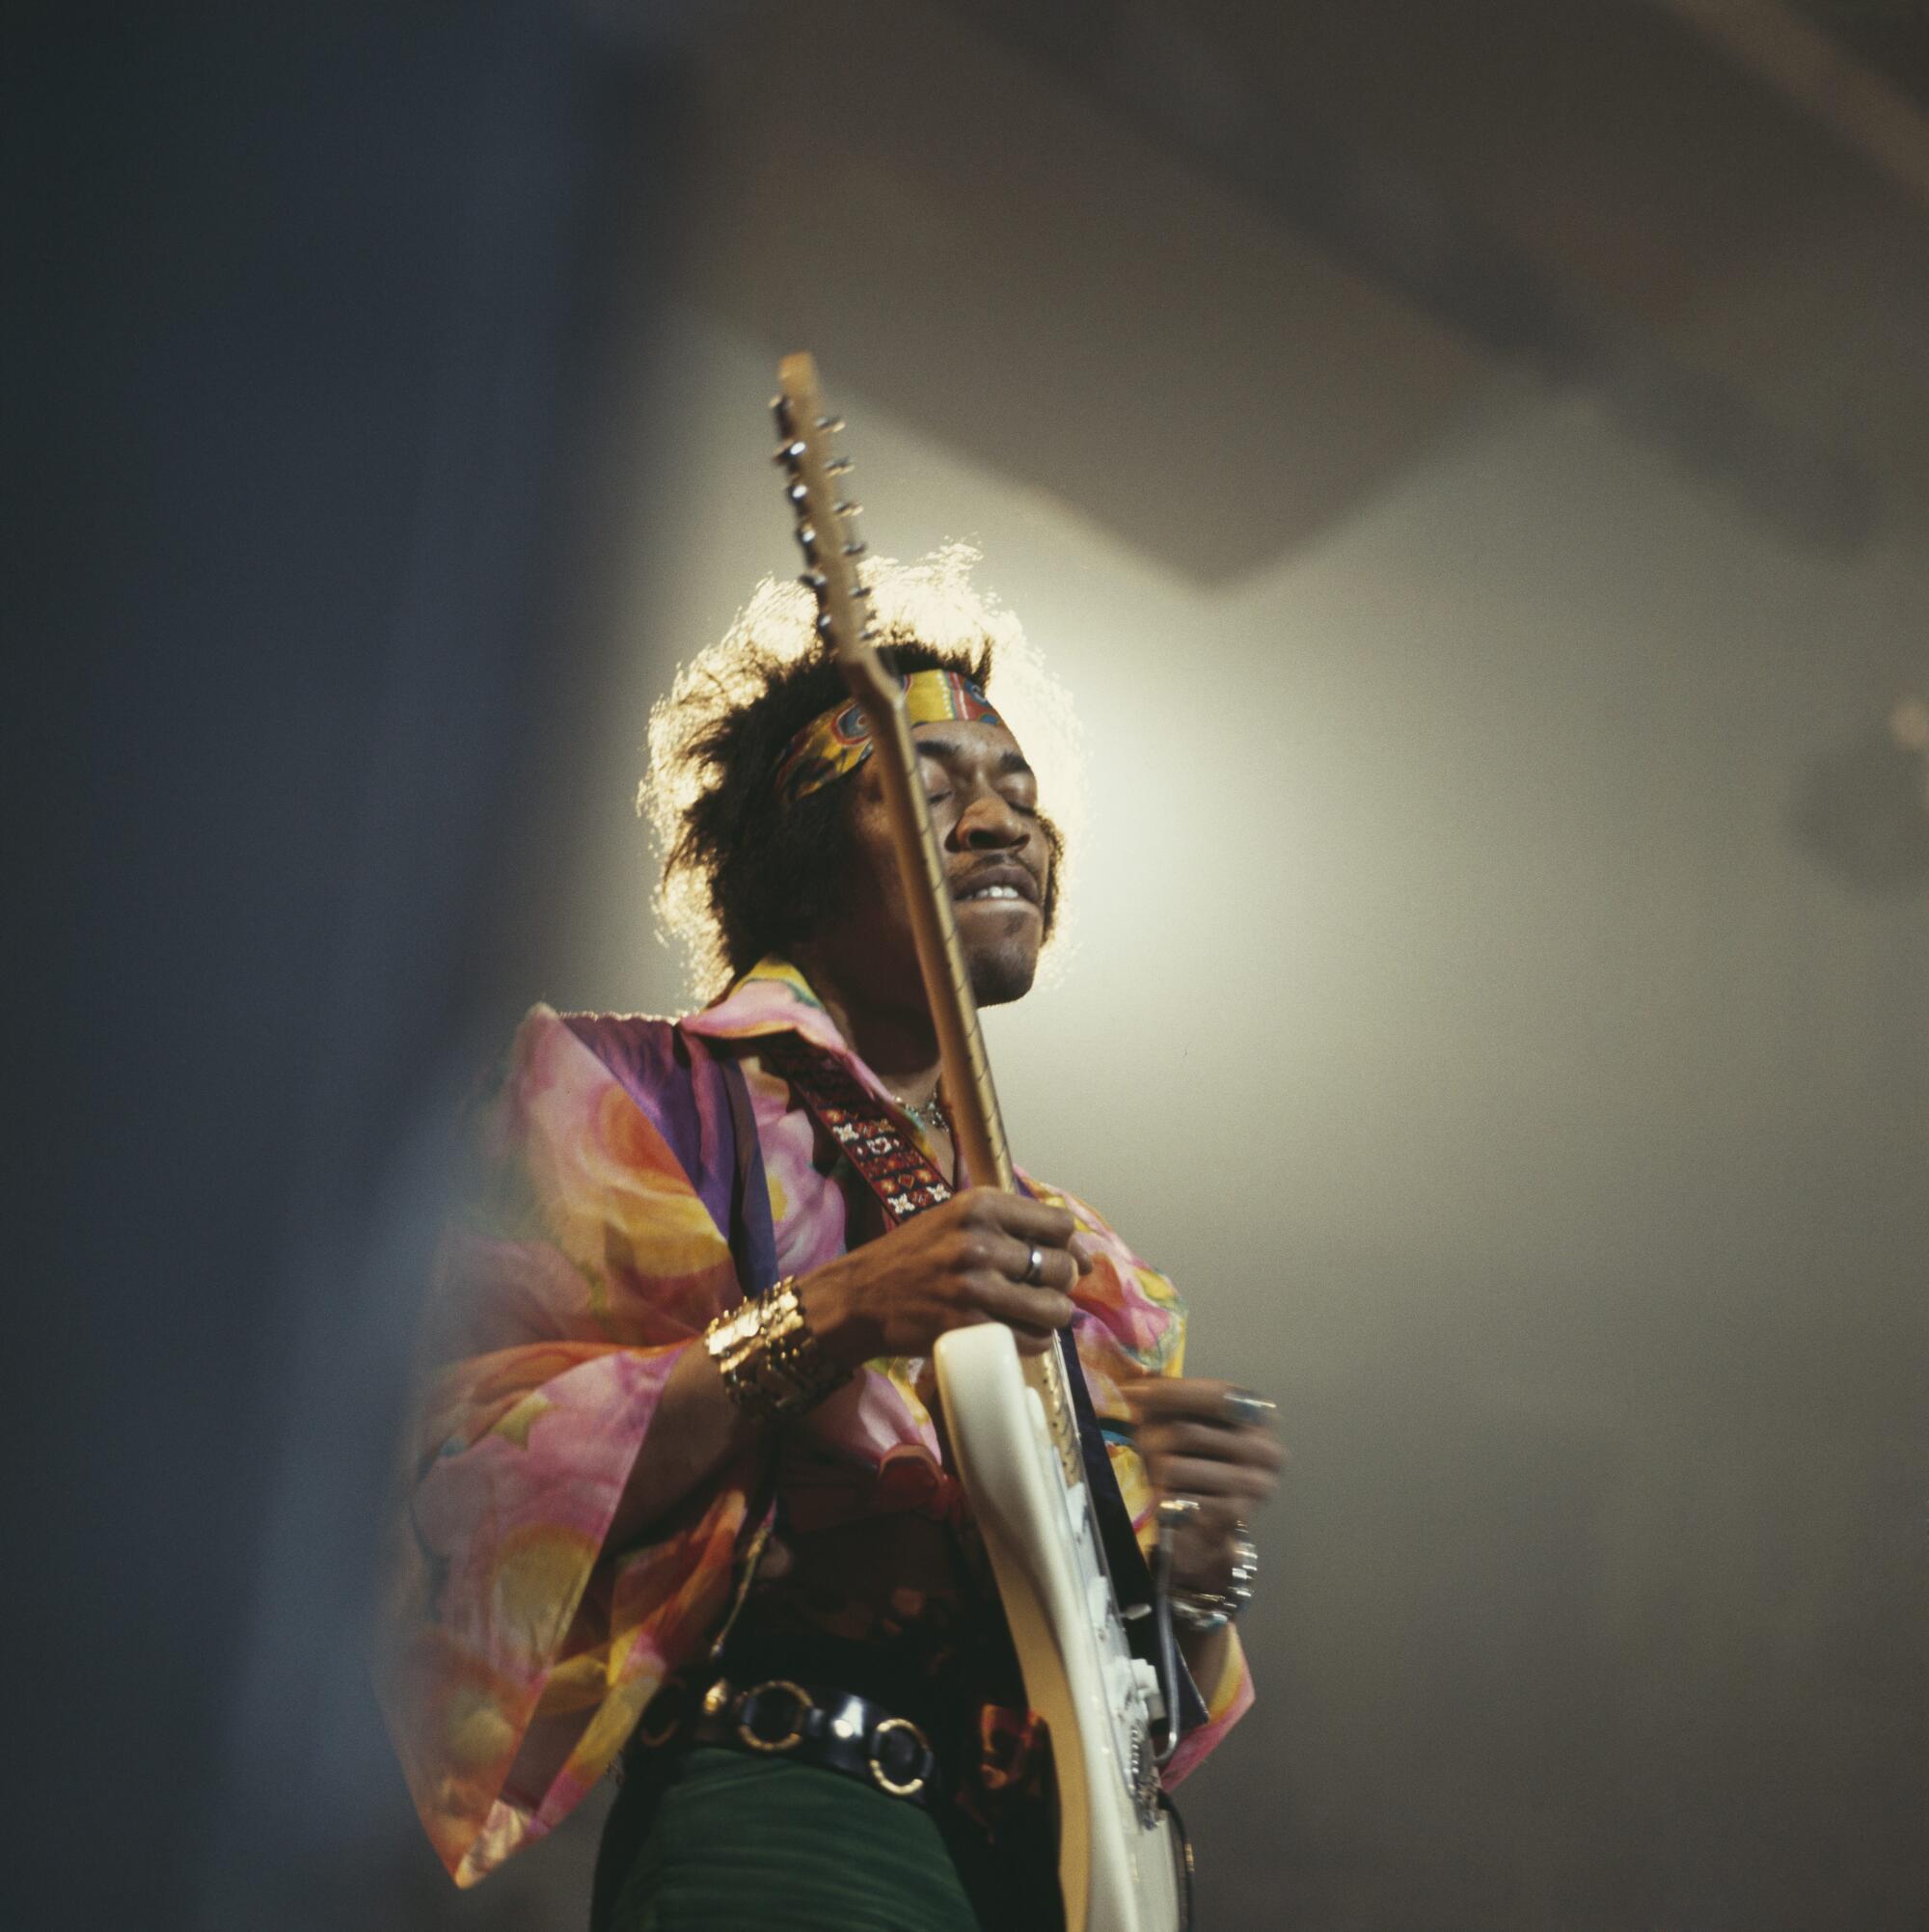 Jimi Hendrix in London on 24th February 1969.